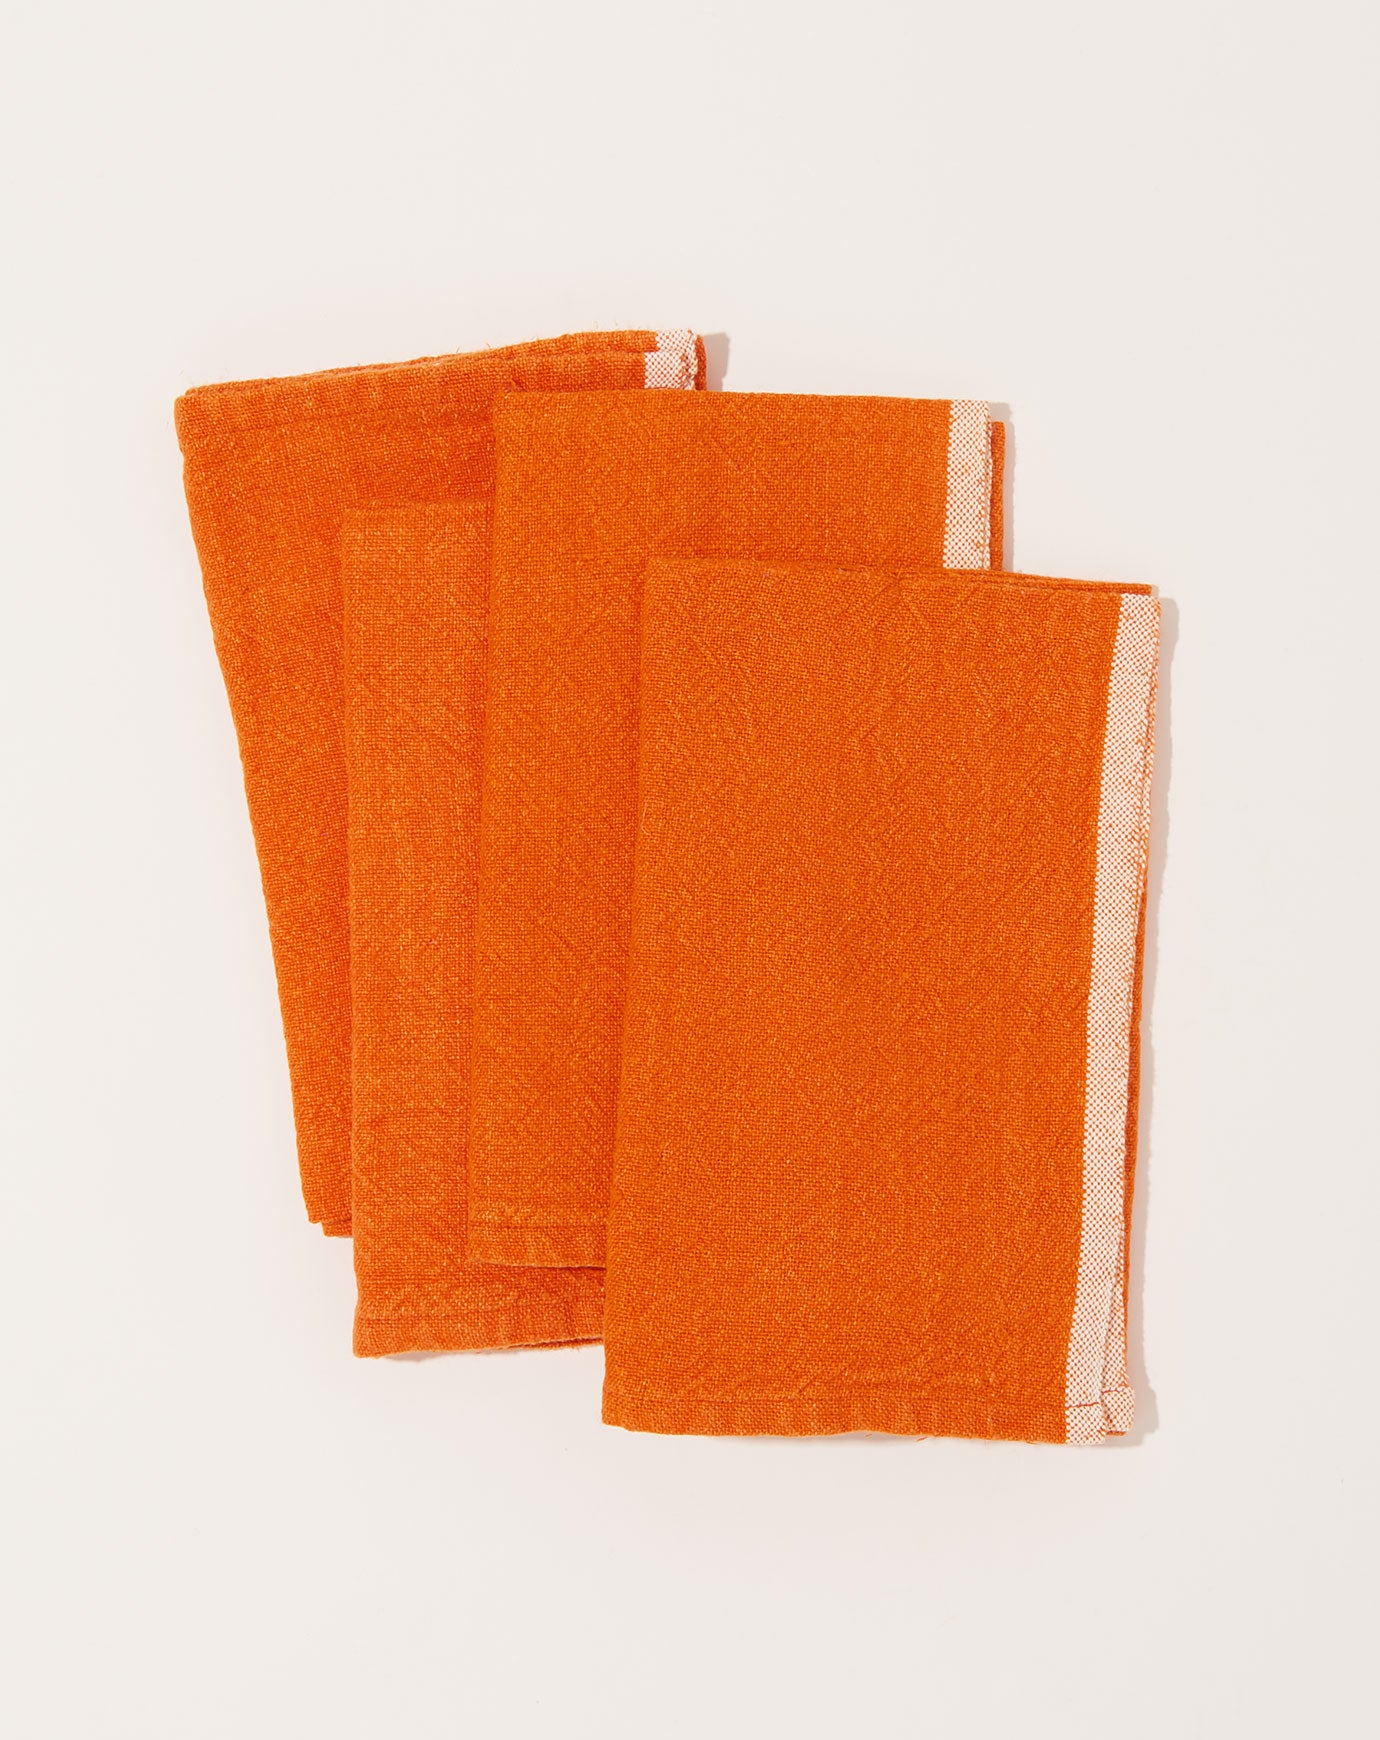 Caravan Chunky Linen Napkins in Orange, Set of 4